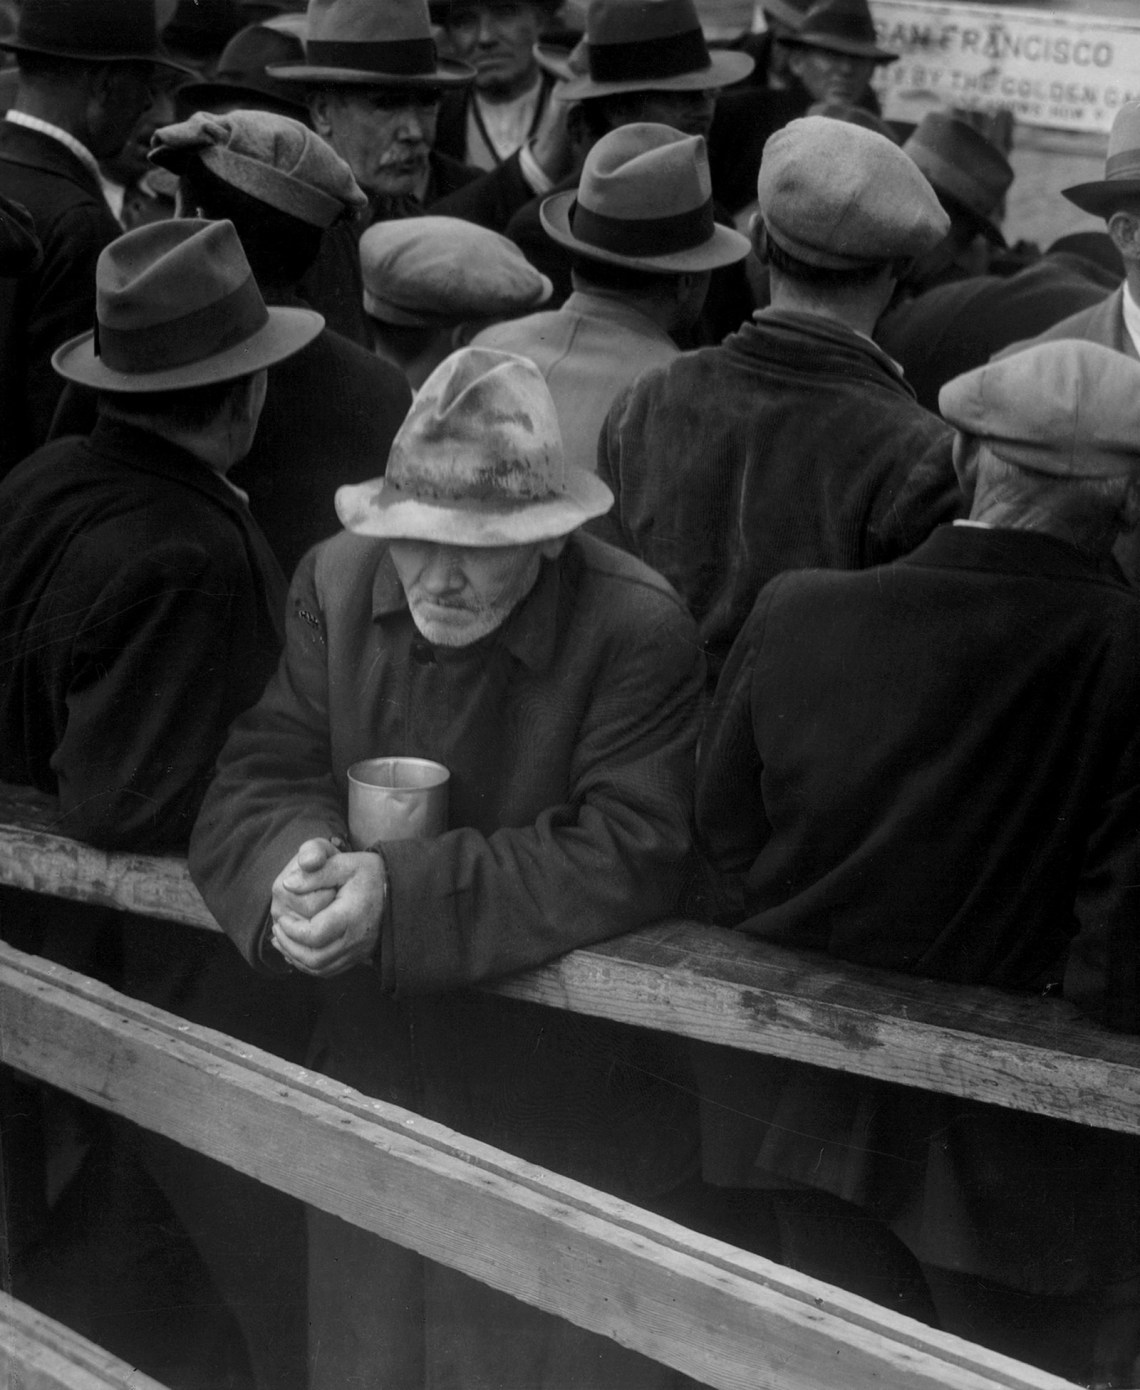 White Angel Bread Line, San Francisco, 1933; photograph by Dorothea Lange